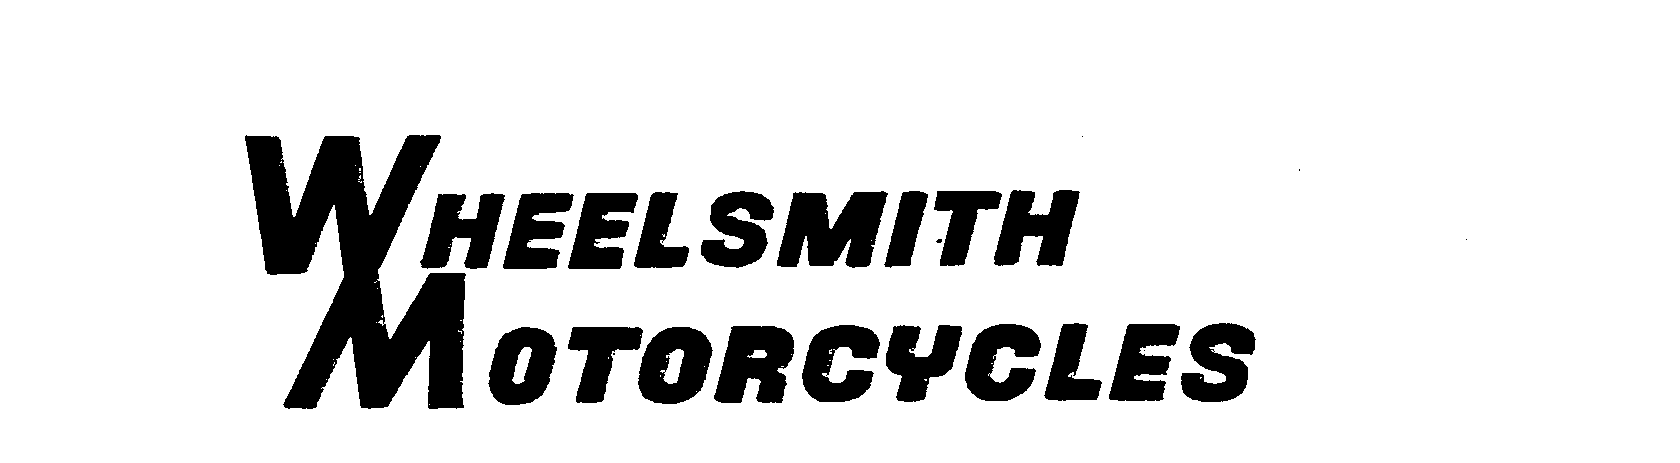  WHEELSMITH MOTORCYCLES